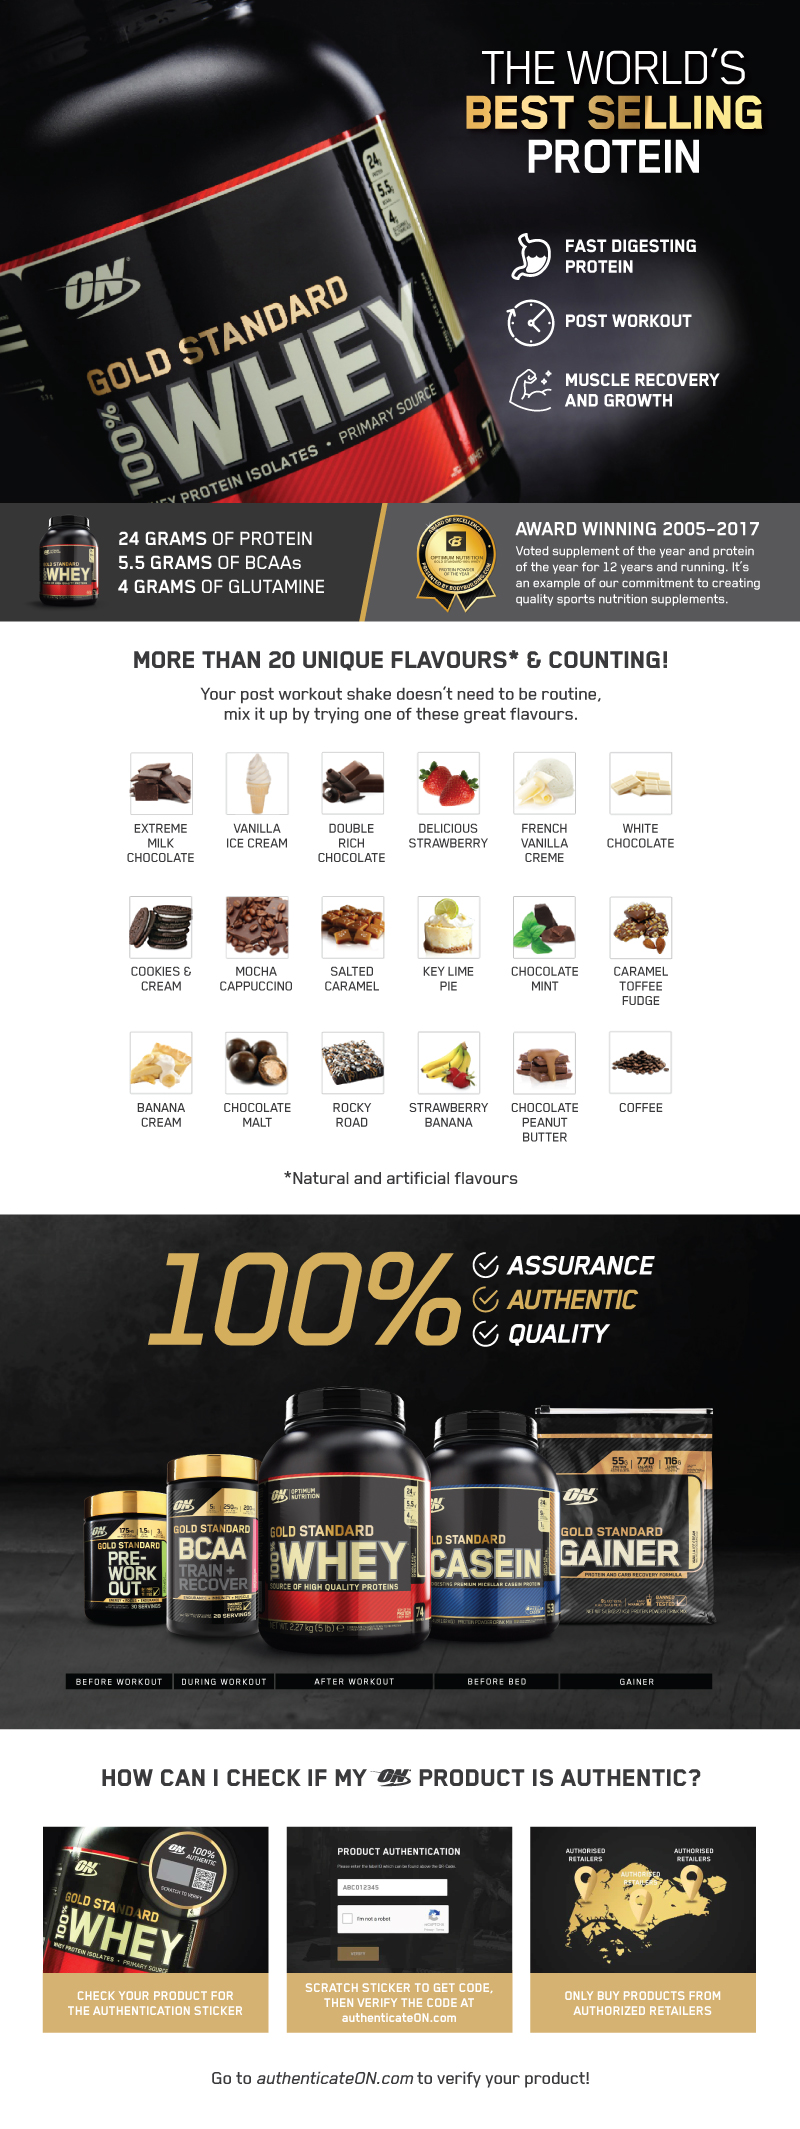 Thực Phẩm Bổ Sung Optimum Nutrition Gold Standard 100% Whey 10lb (4.5kg)